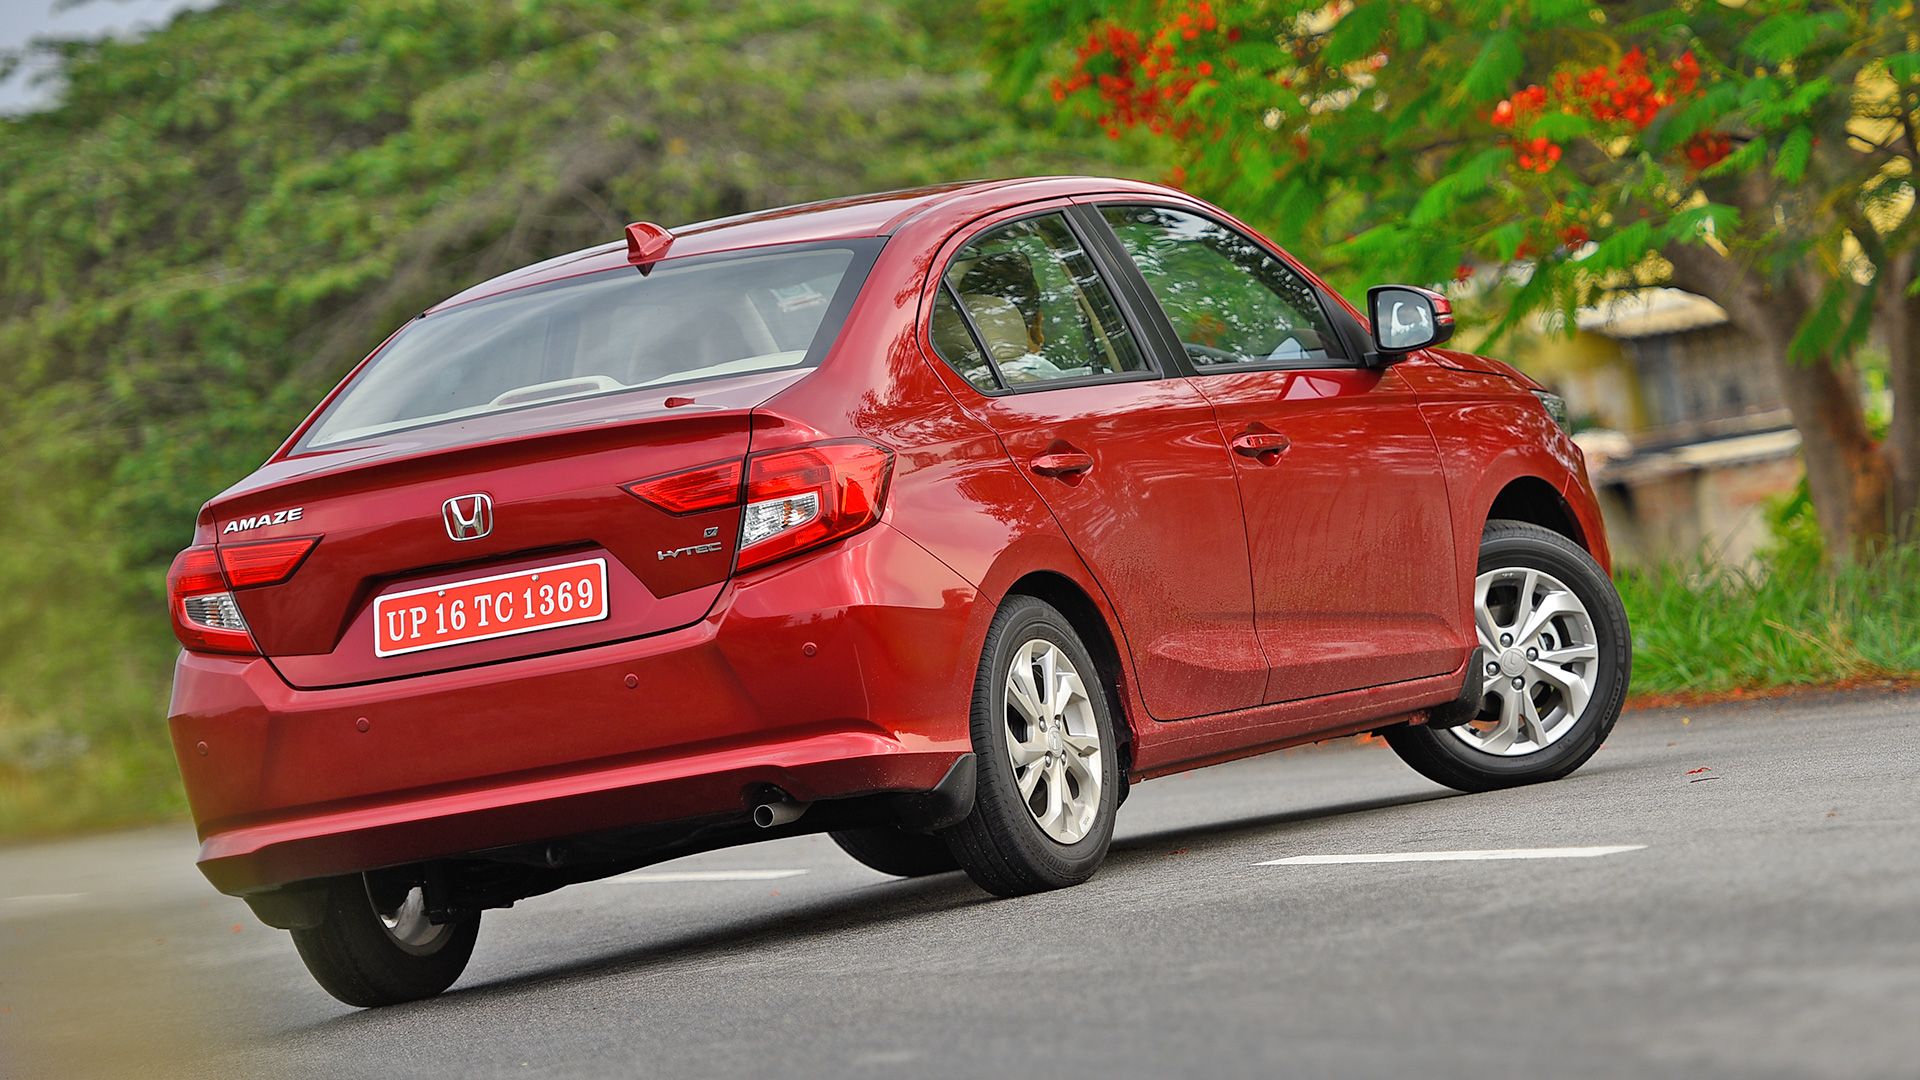 Honda Amaze Price in India - Images, Mileage & Reviews - carandbike